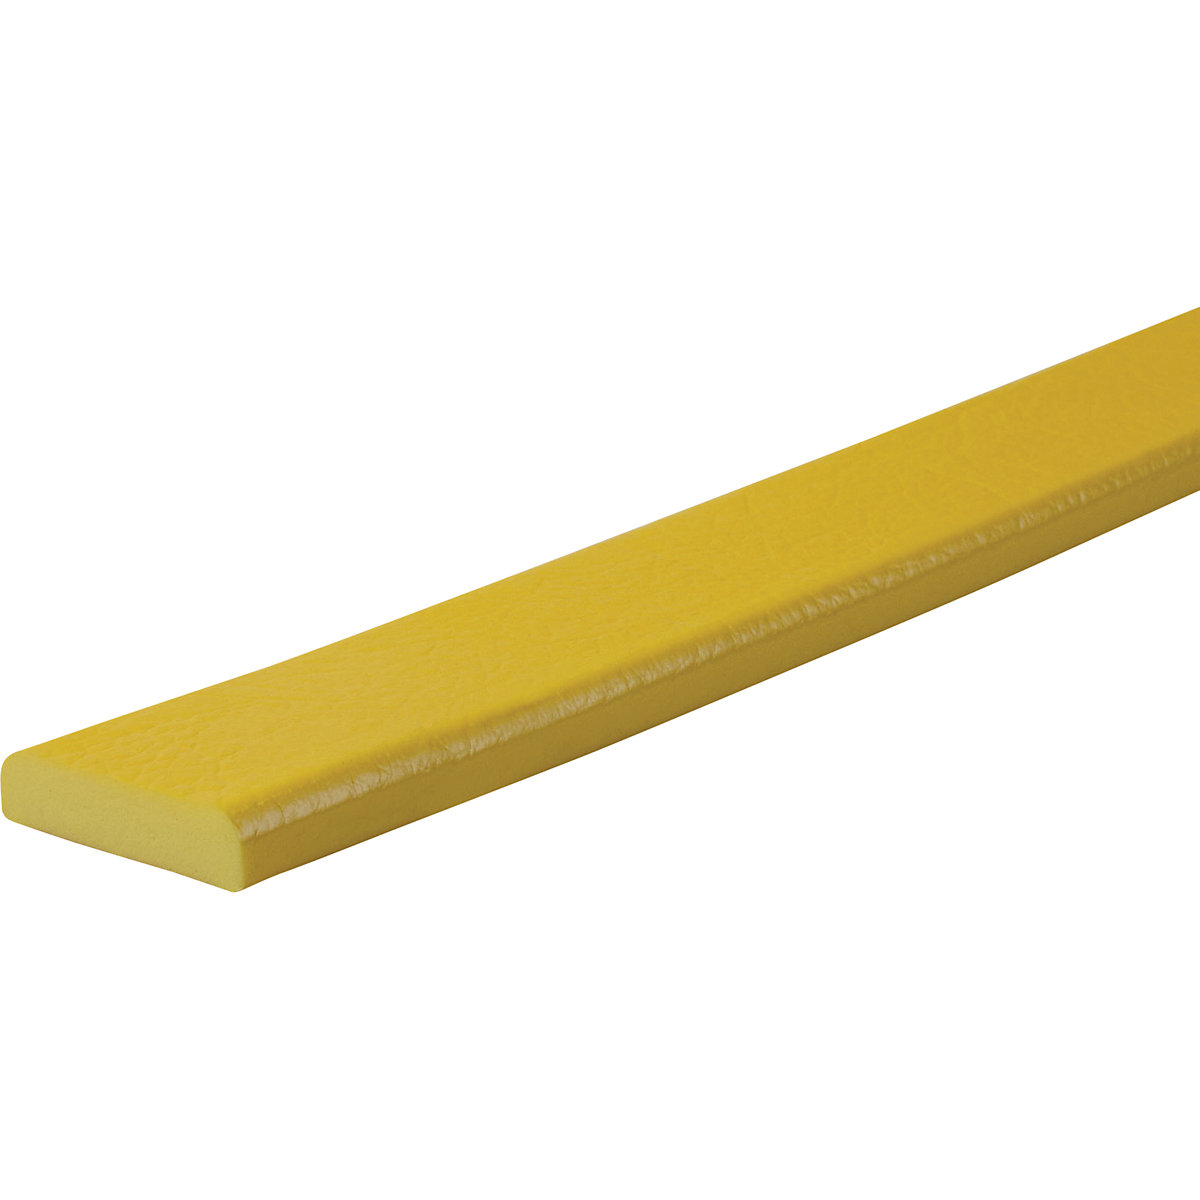 Knuffi® felületvédő – SHG, F típus, 1 m-es darab, sárga-34